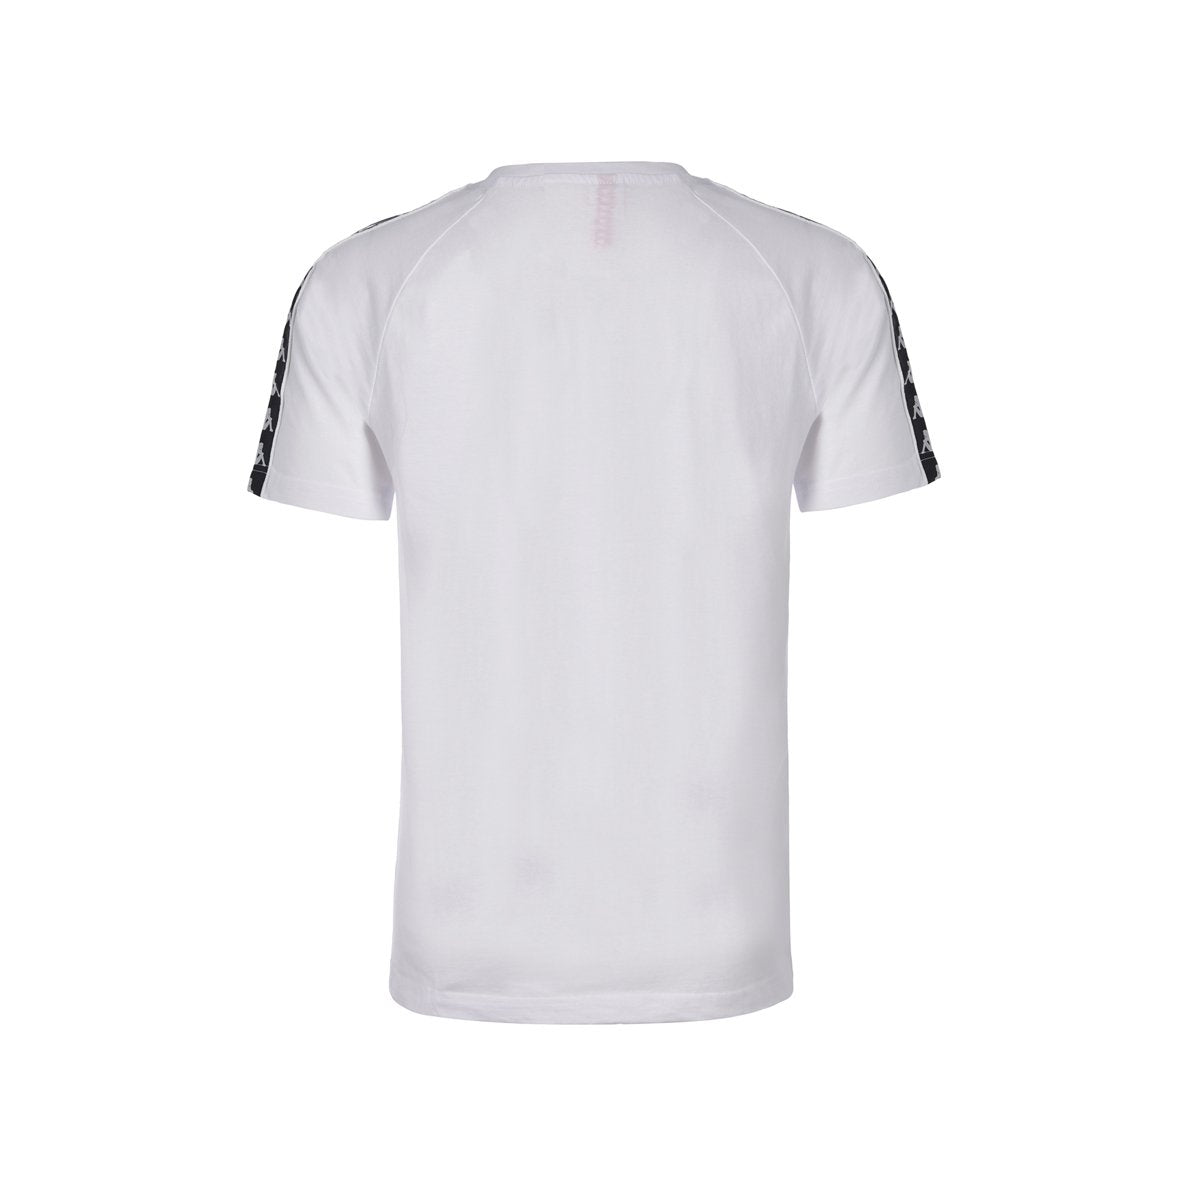 Camiseta Coen blanco hombre - Imagen 6